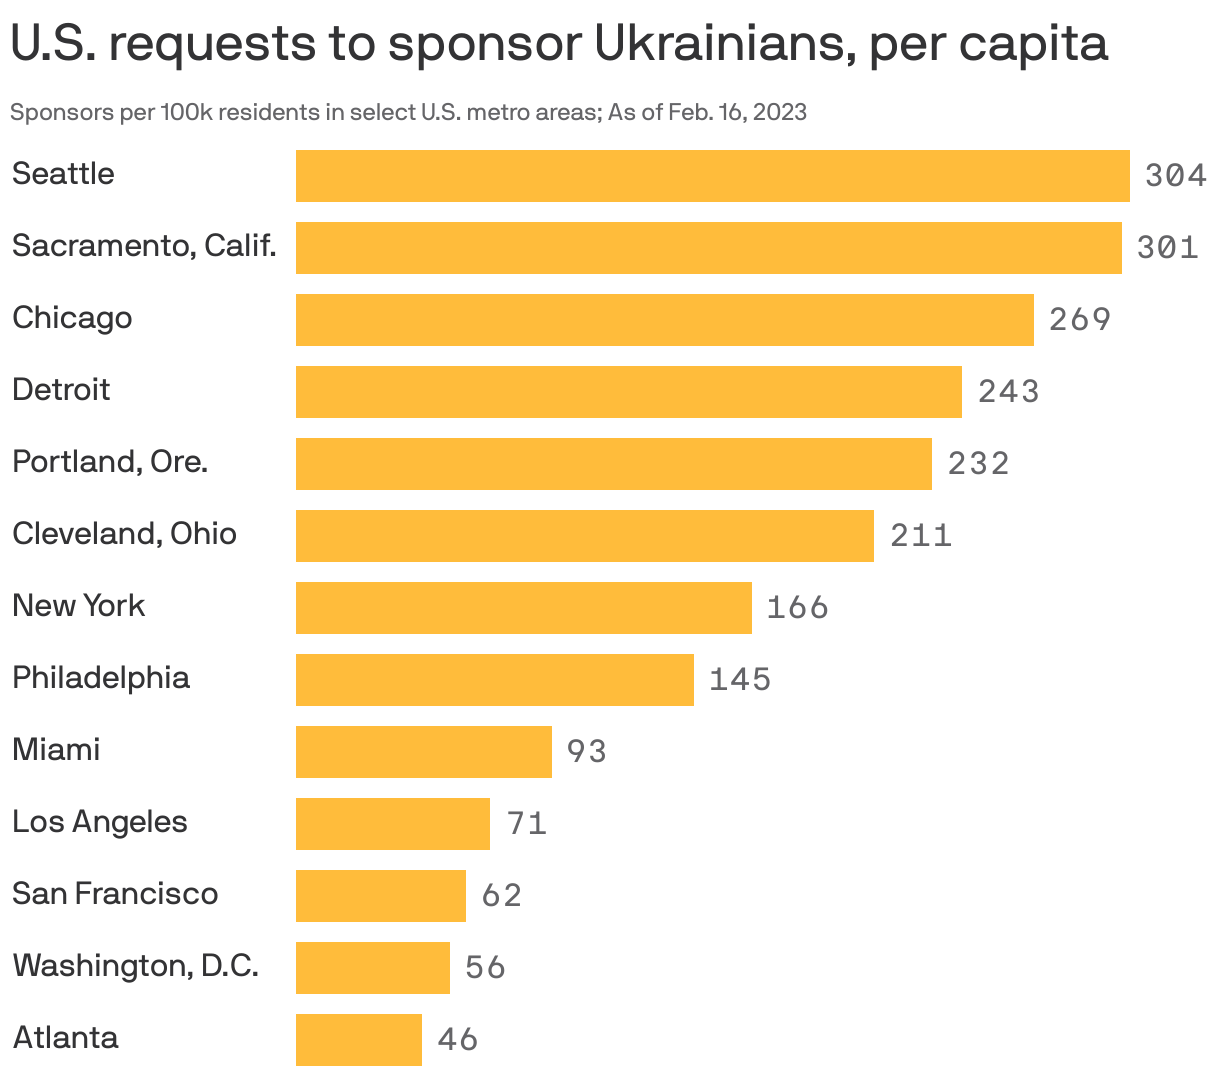 U.S. requests to sponsor Ukrainians, per capita